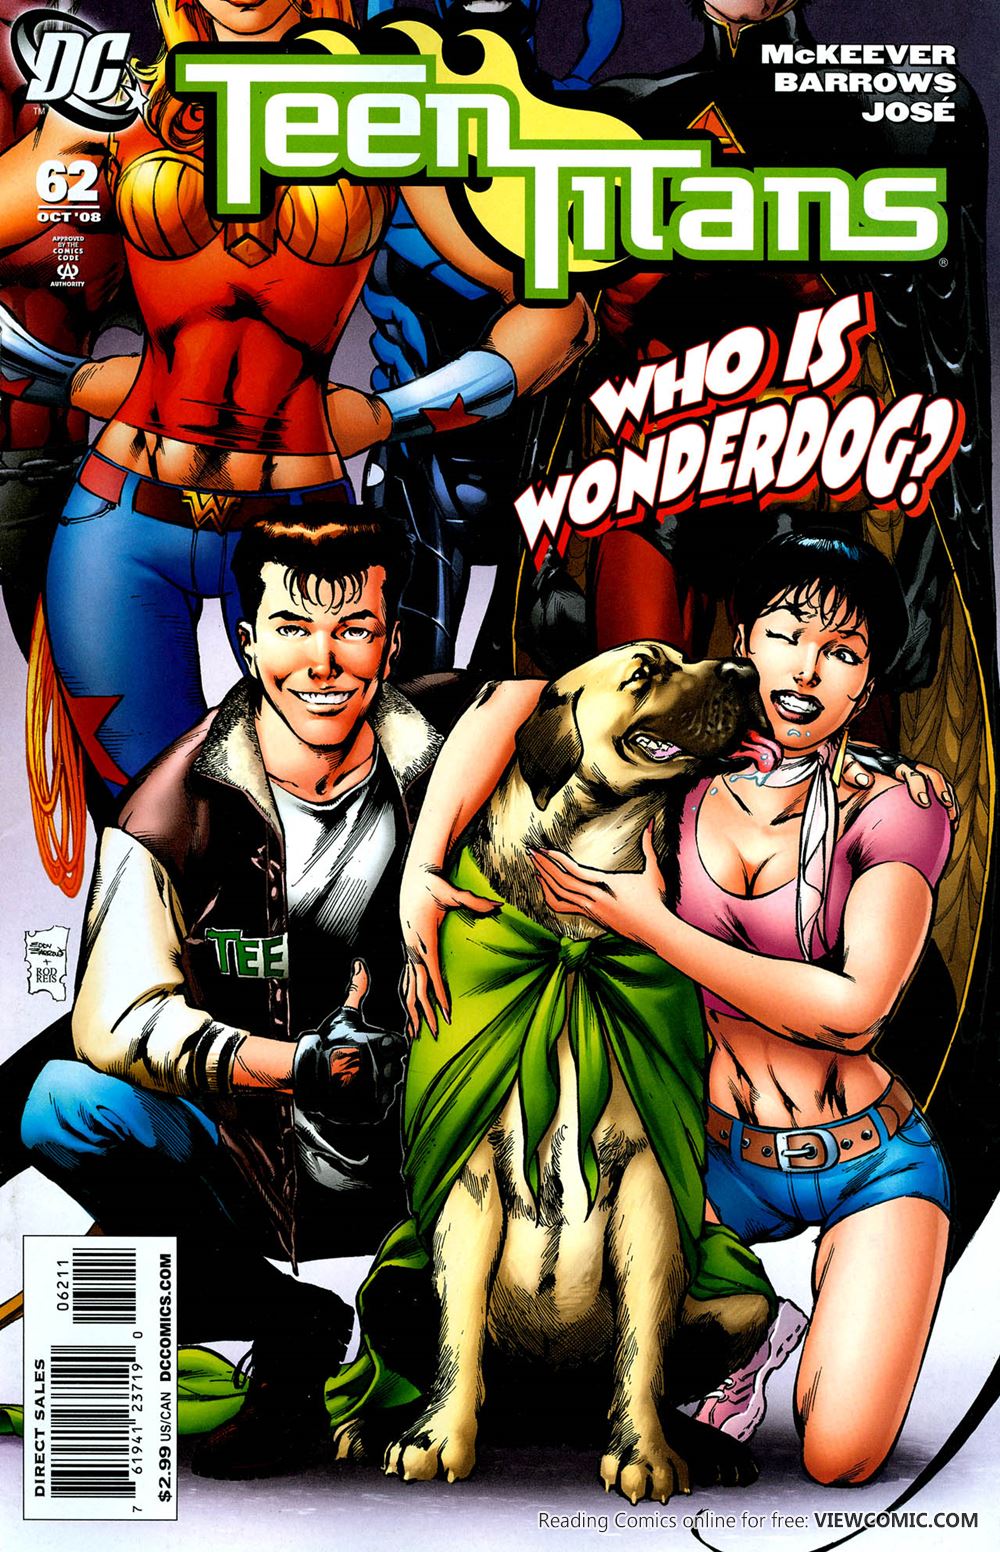 Teen Titans V3 062 Read Teen Titans V3 062 Comic Online In High Quality Read Full Comic